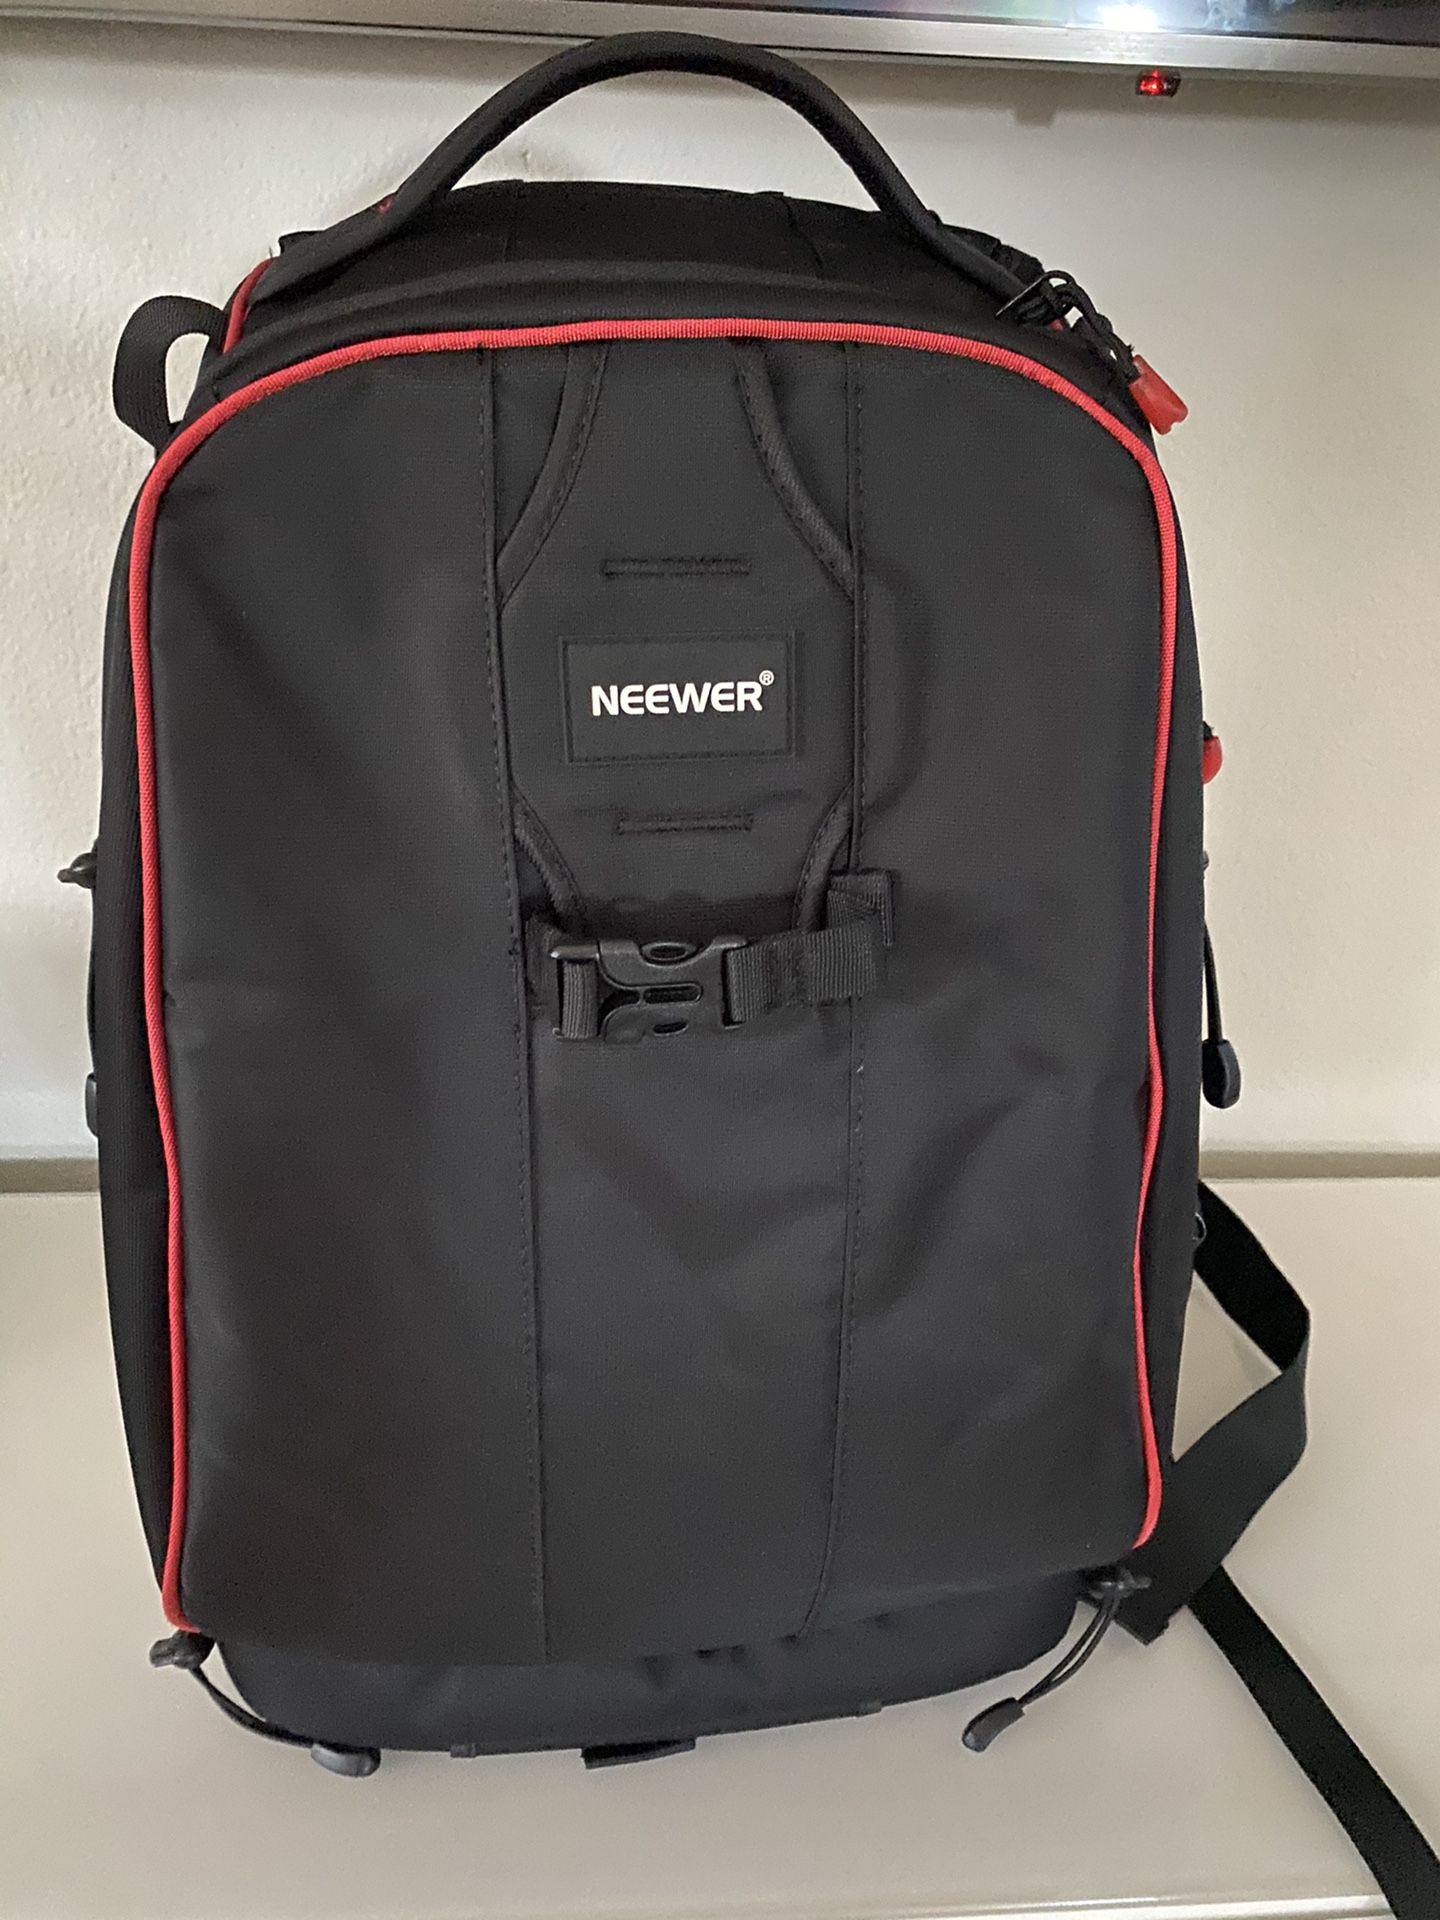 DSLR camera backpack Neewer